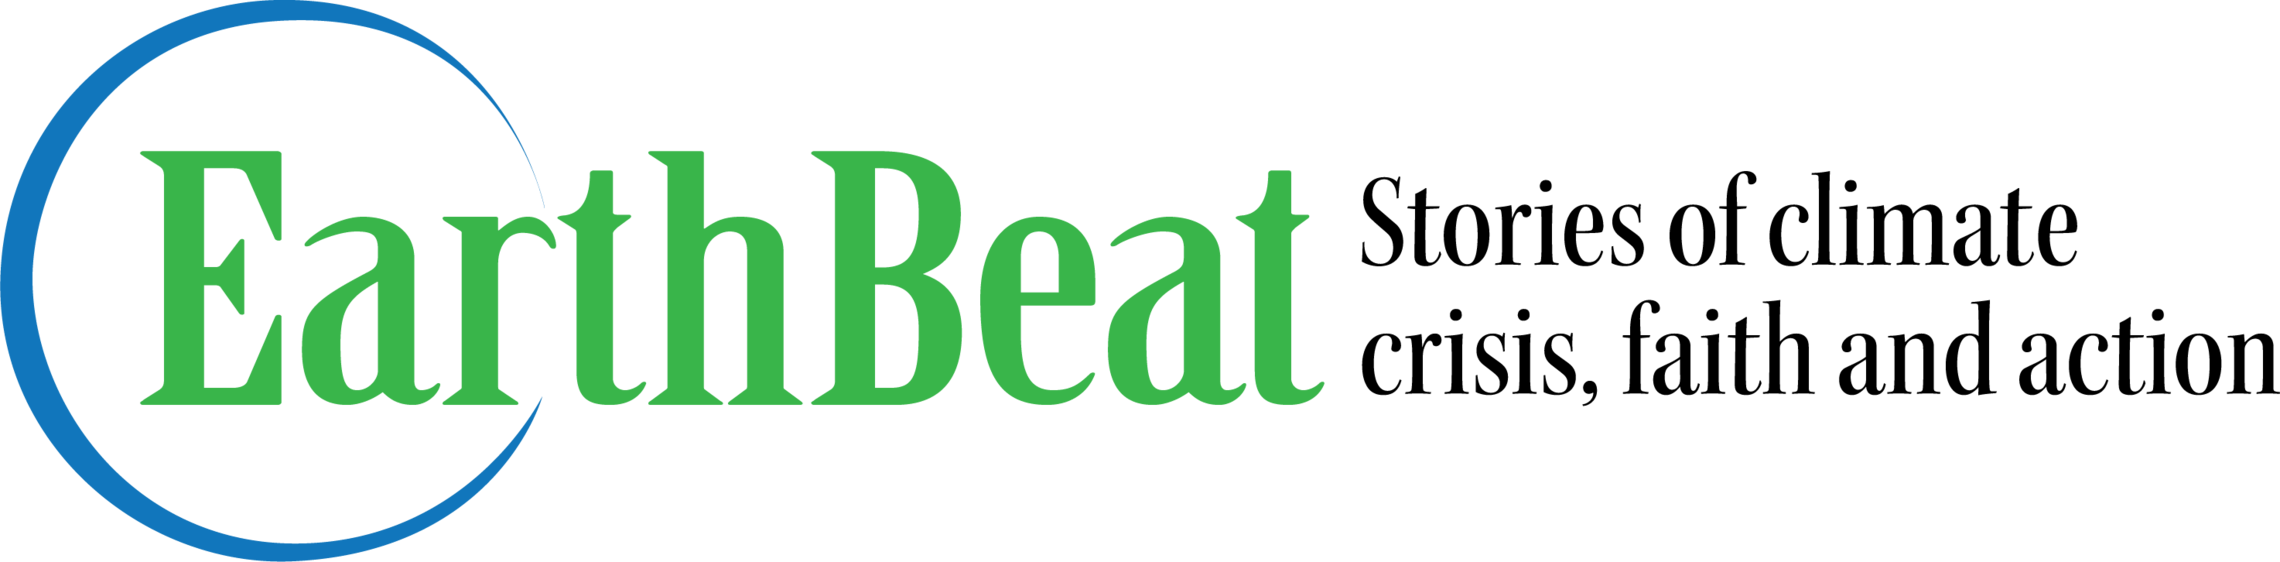 High Res Earthbeat Logo